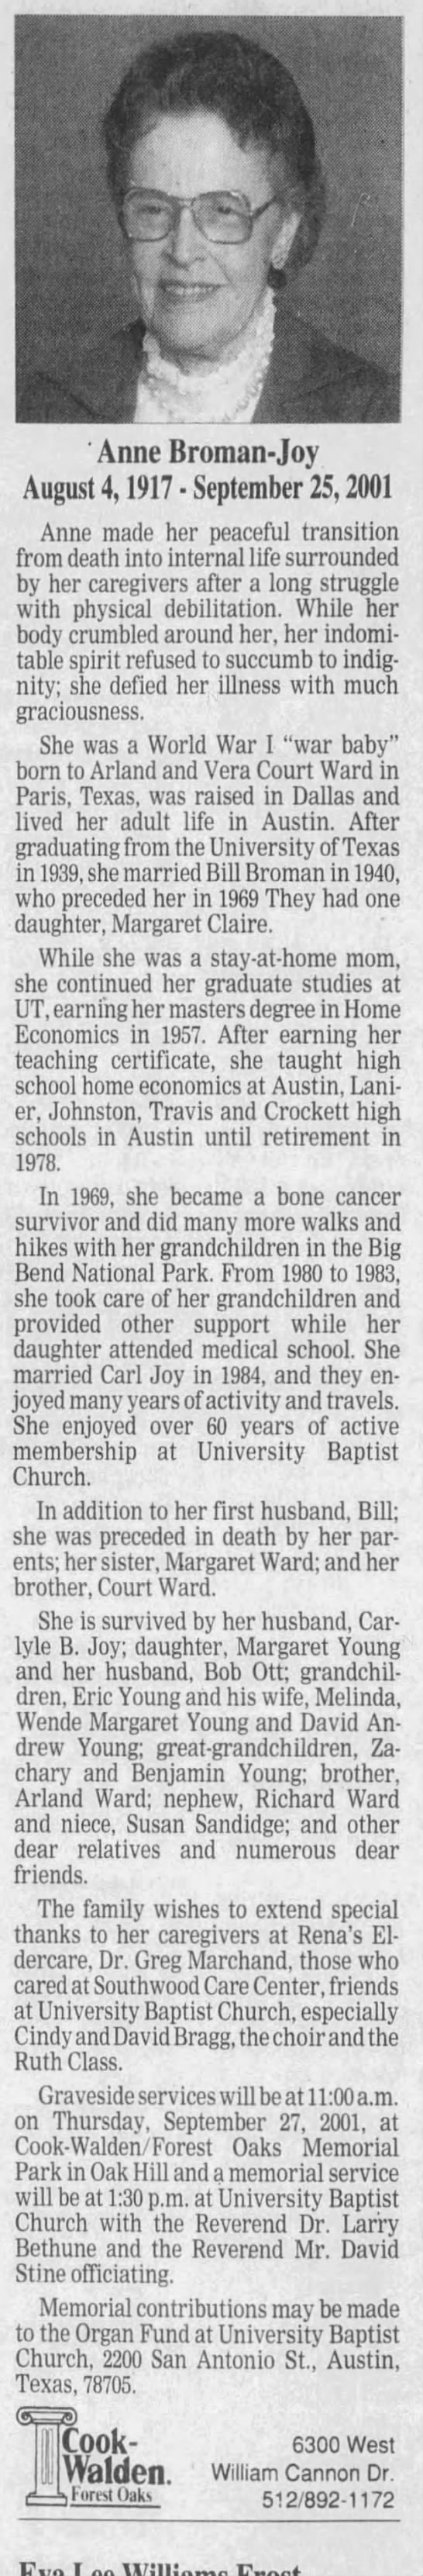 Obituary for Anne Broman-Joy, 1917-2001 - 